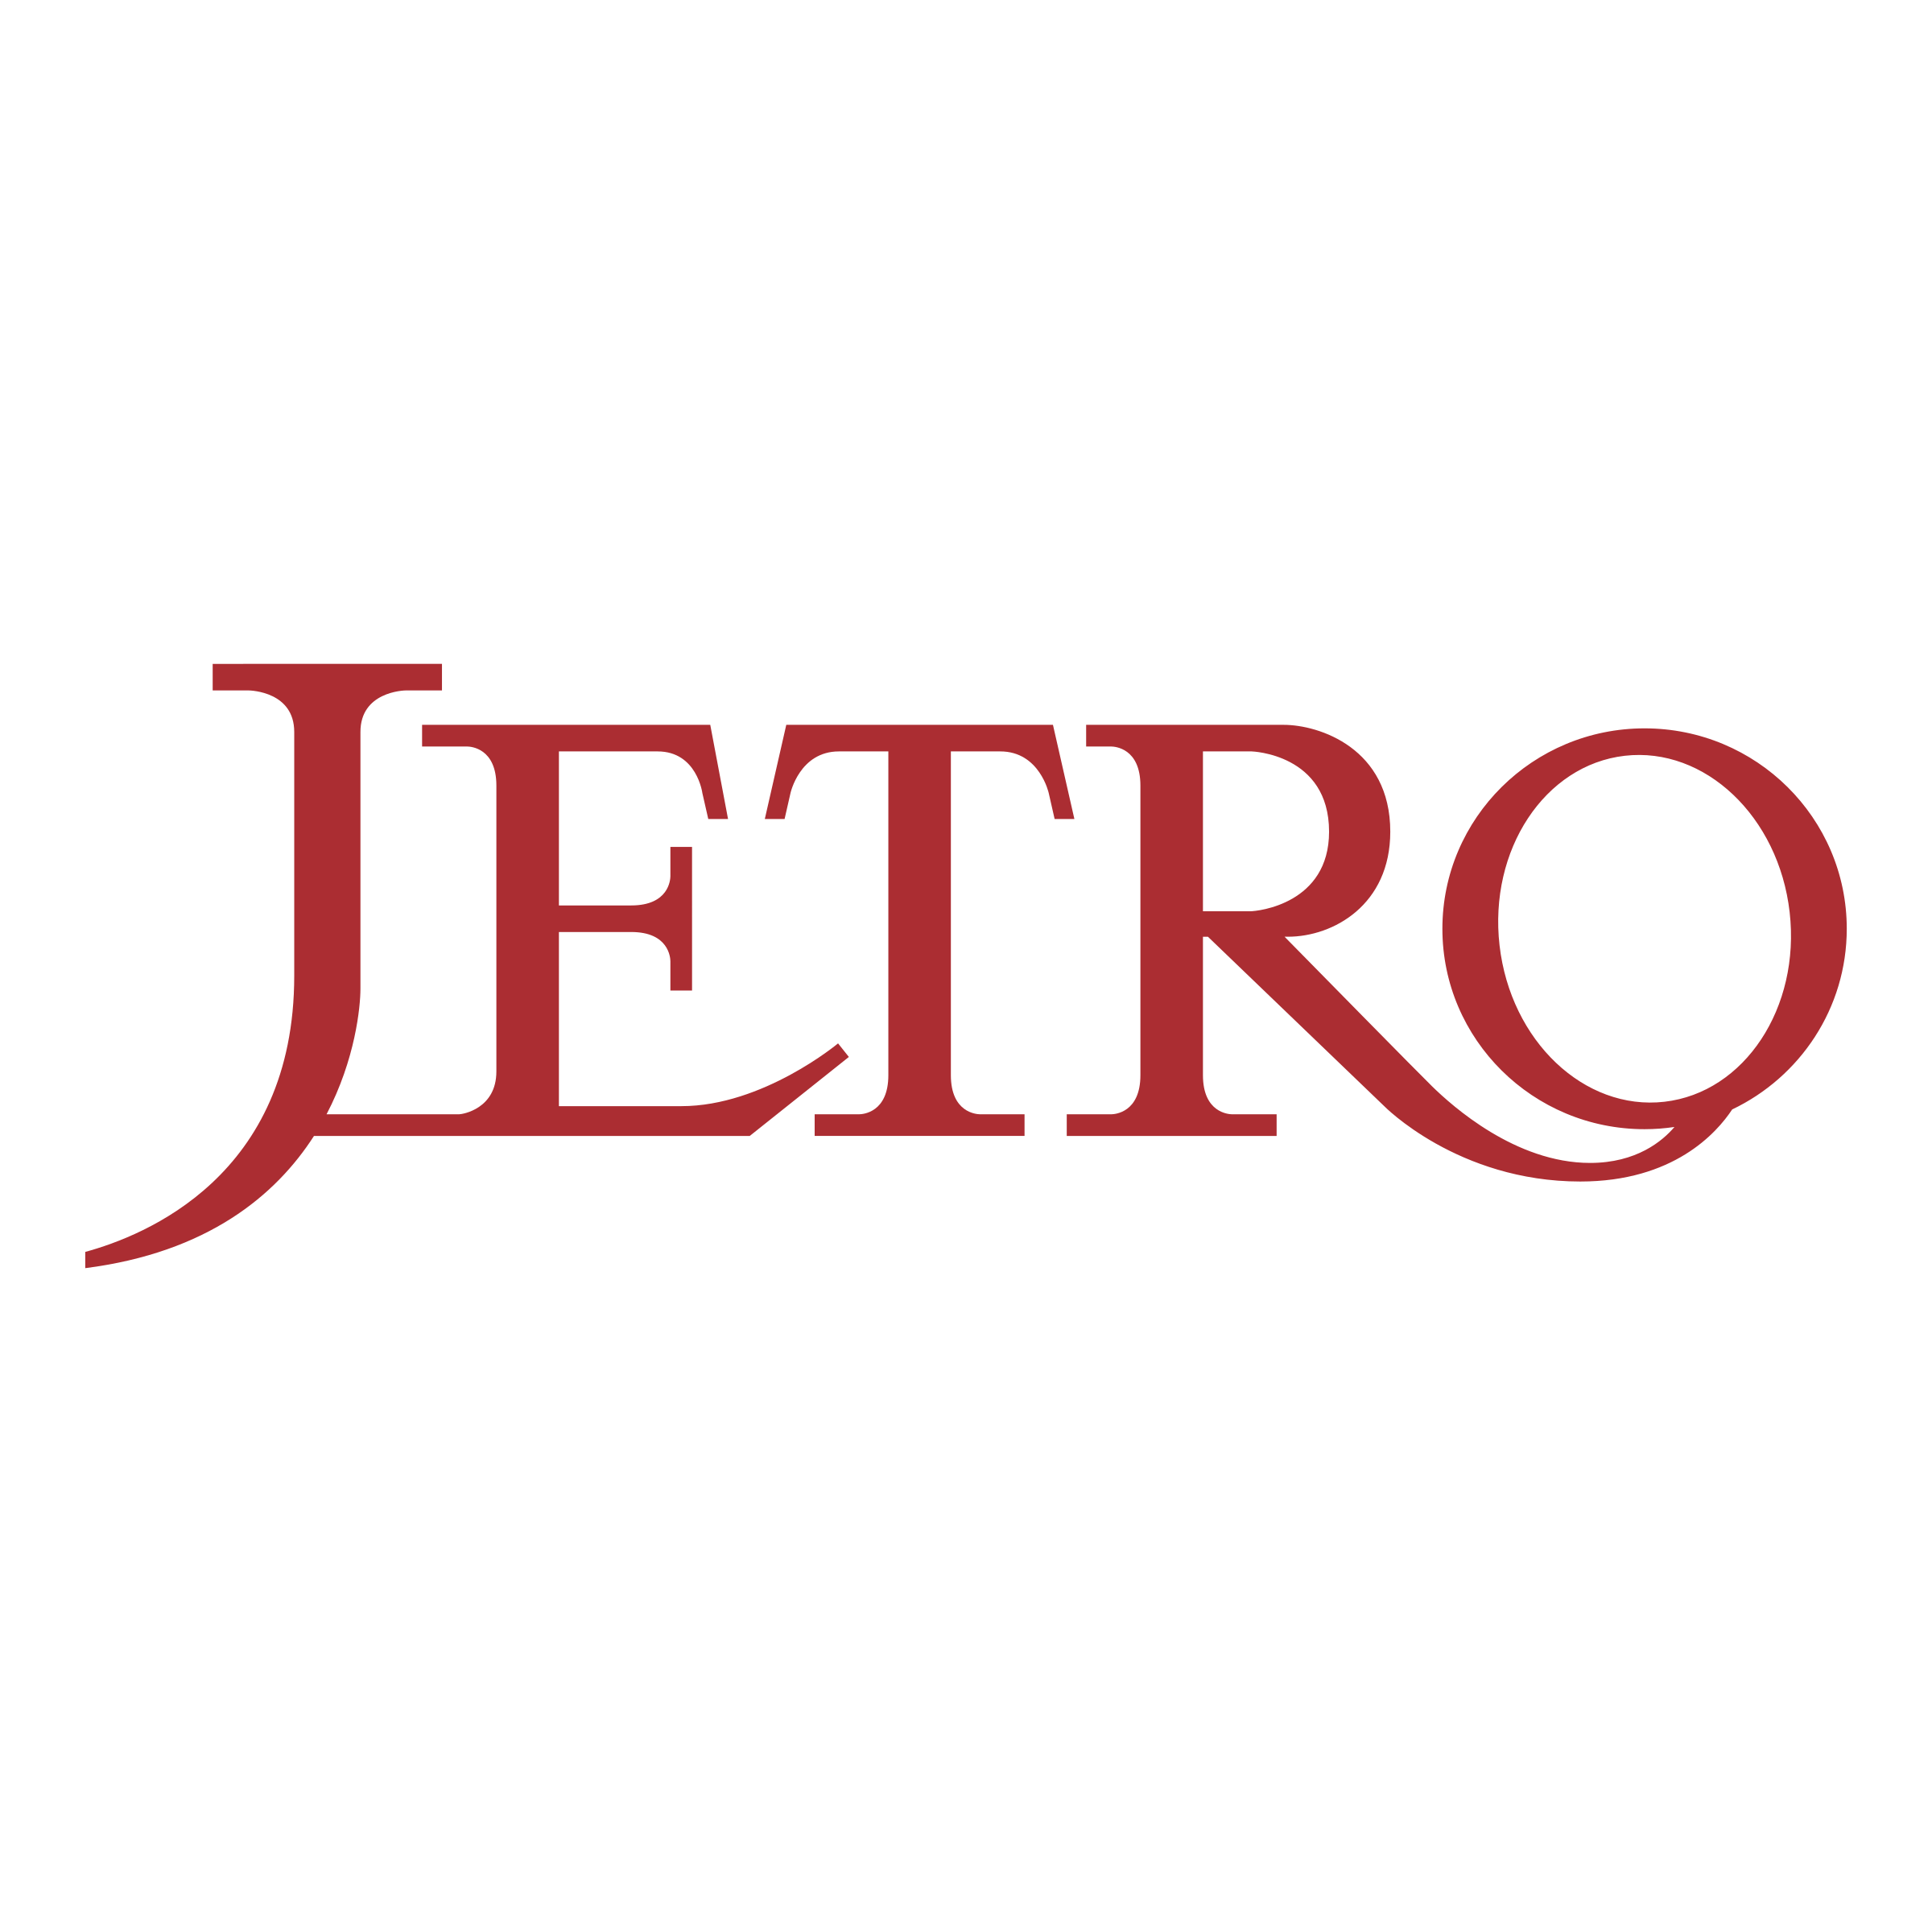 Jetro Logo - Jetro Logo PNG Transparent & SVG Vector - Freebie Supply